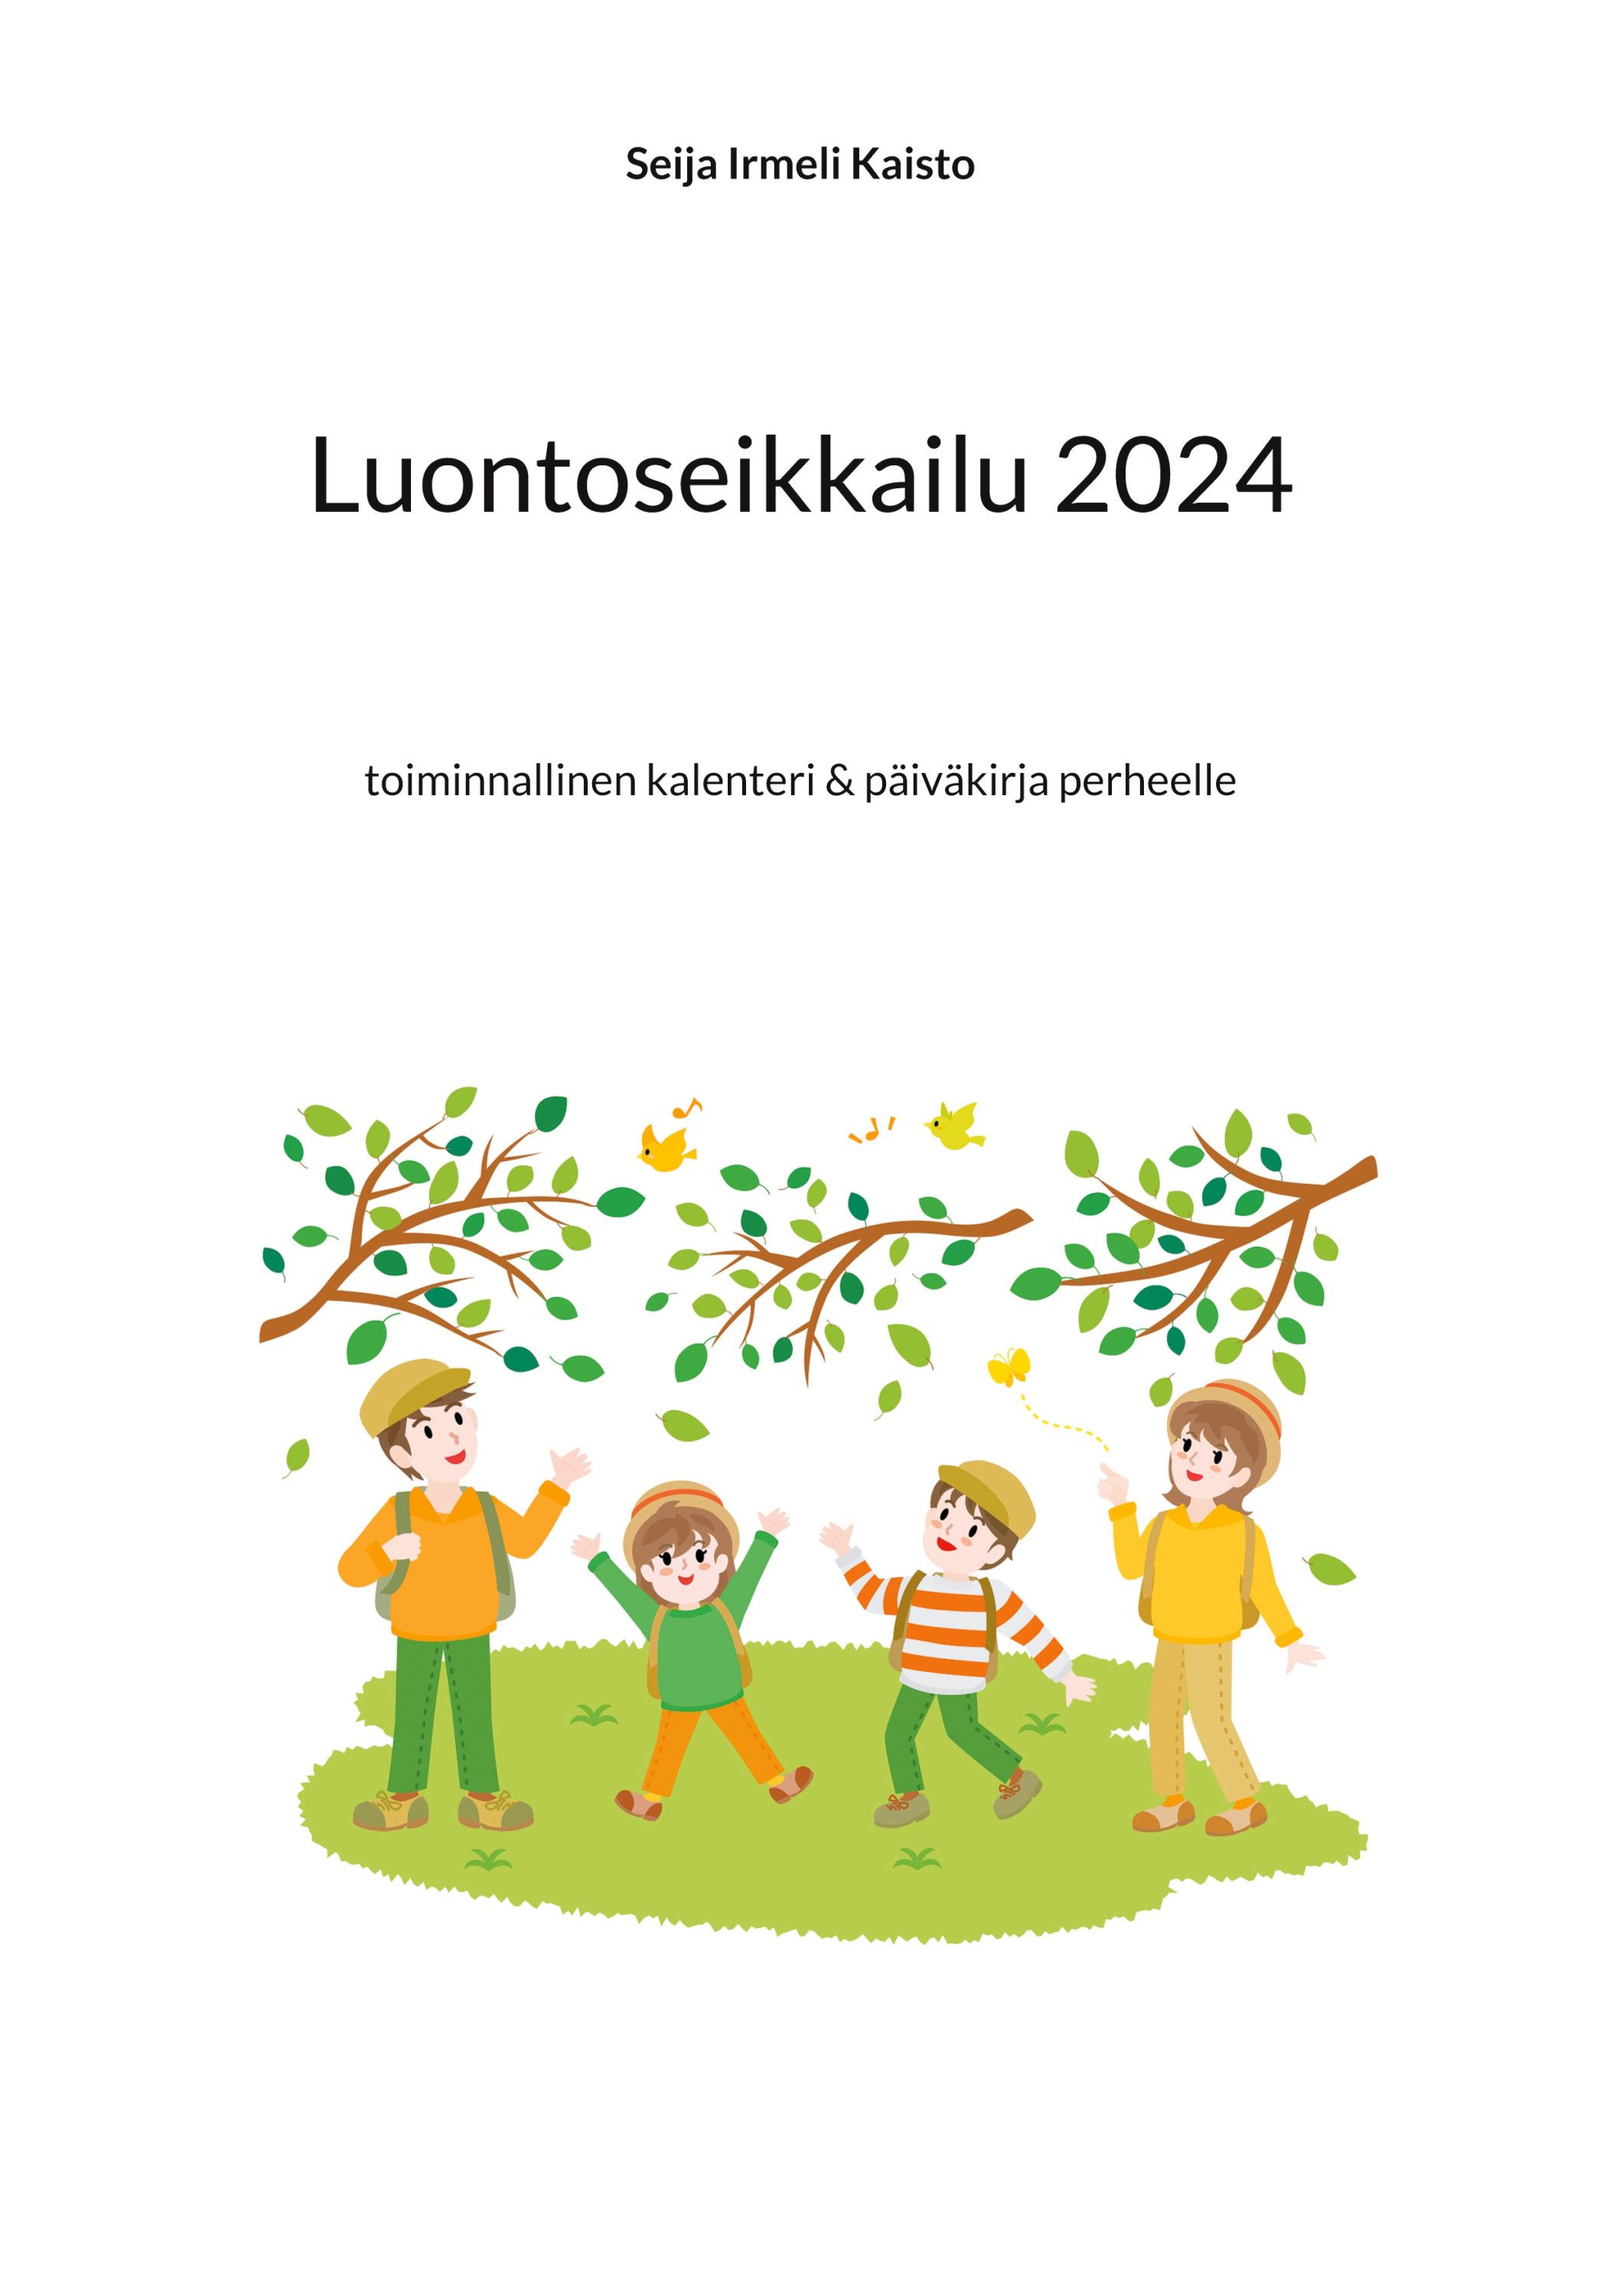 Seija Irmeli Kaisto : Luontoseikkailu 2024